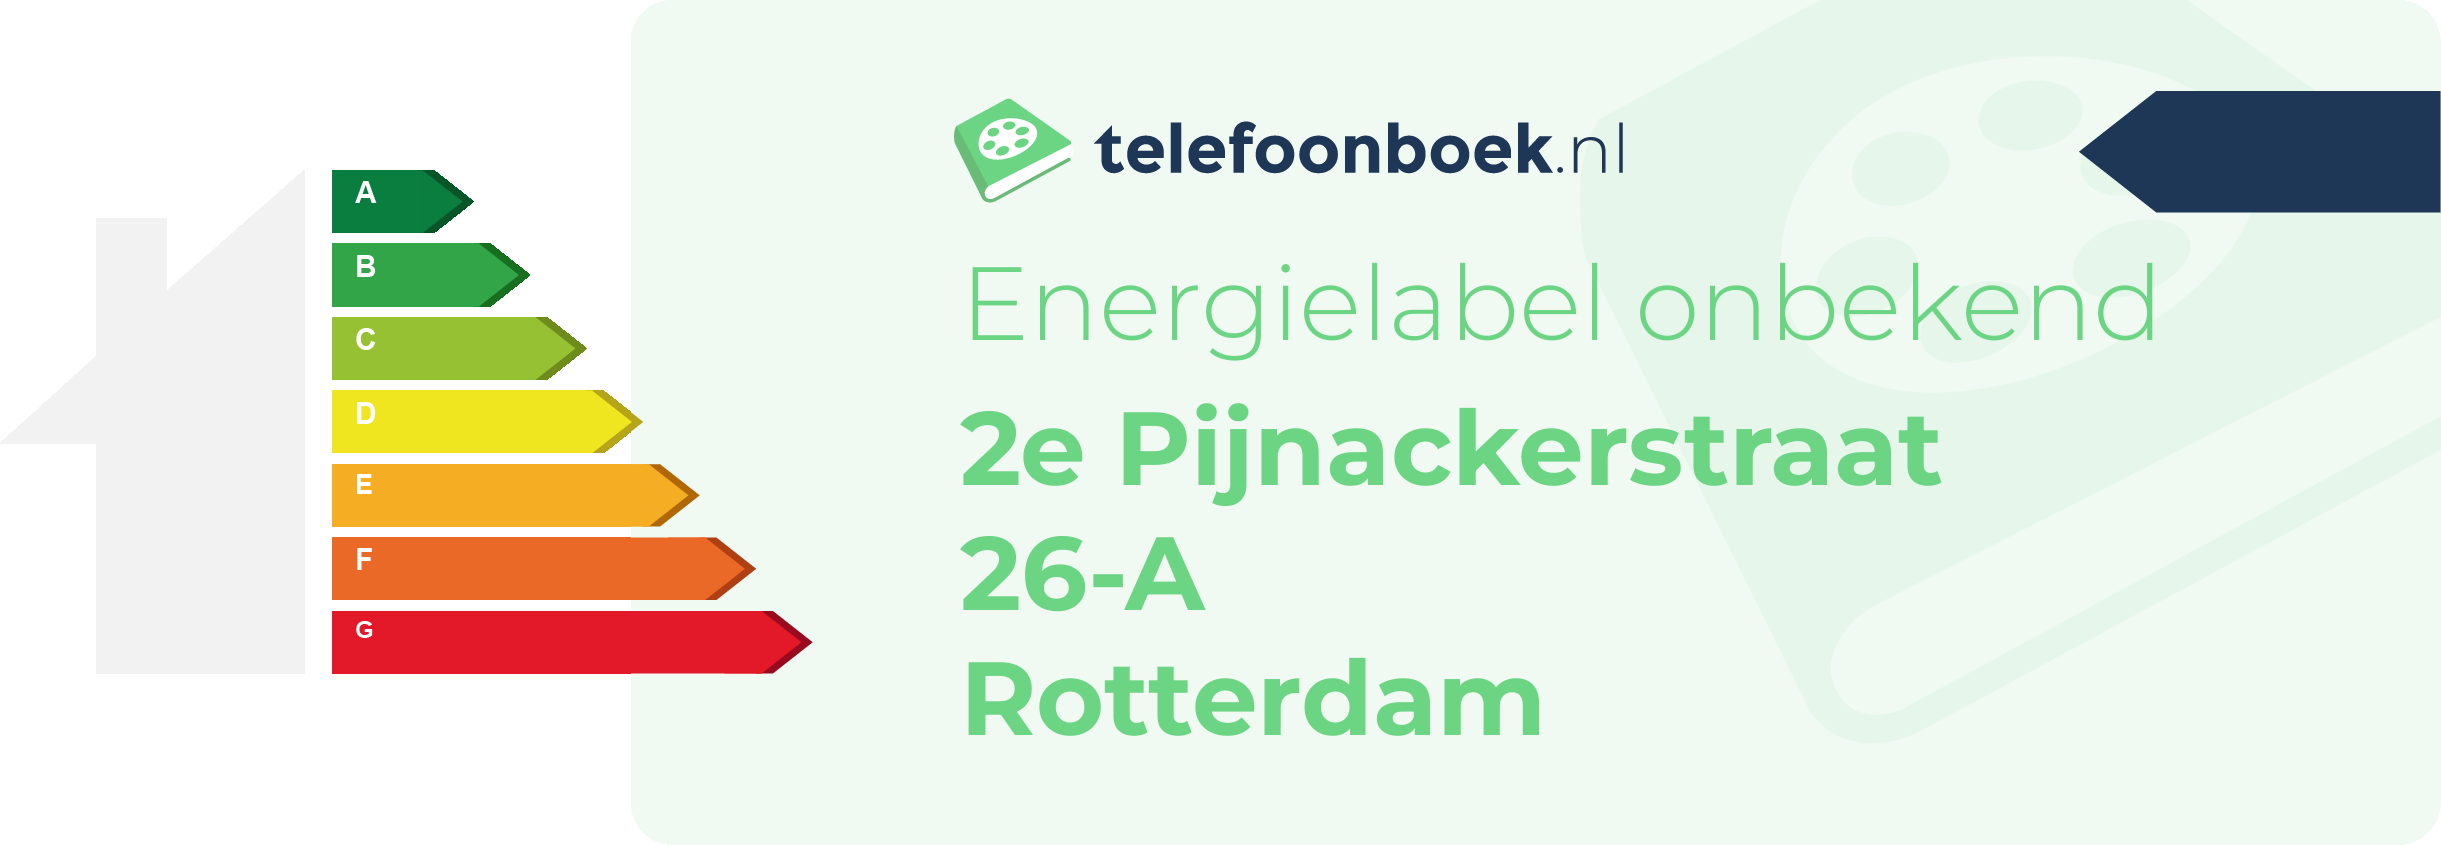 Energielabel 2e Pijnackerstraat 26-A Rotterdam